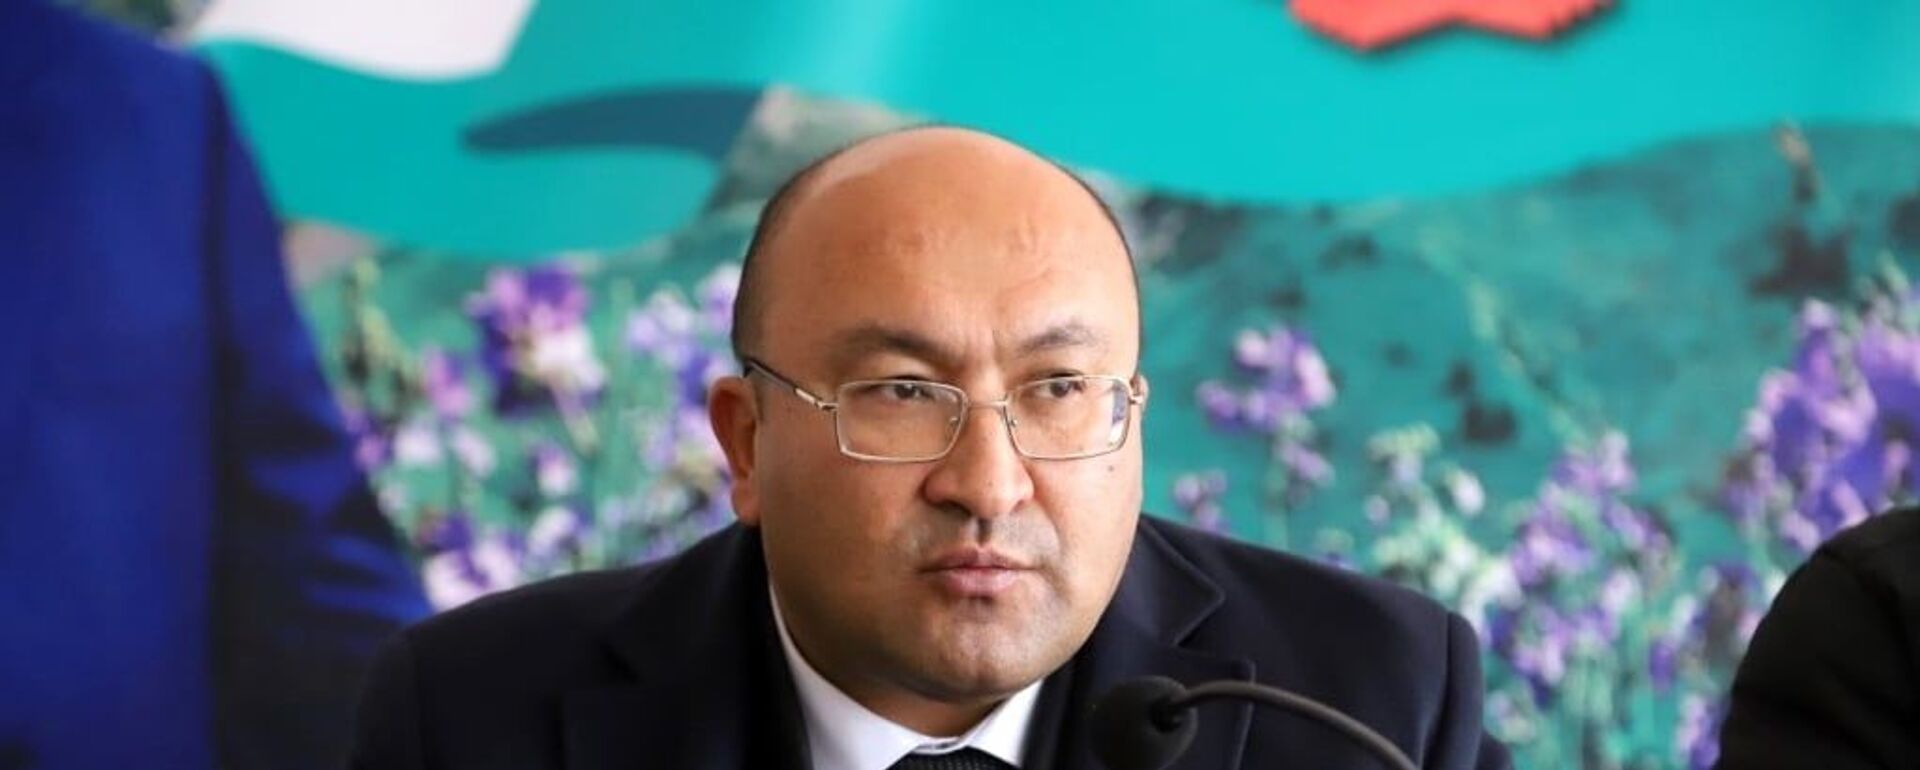 Баховаддин Баходурзода, председатель город Исфара - Sputnik Таджикистан, 1920, 29.04.2021